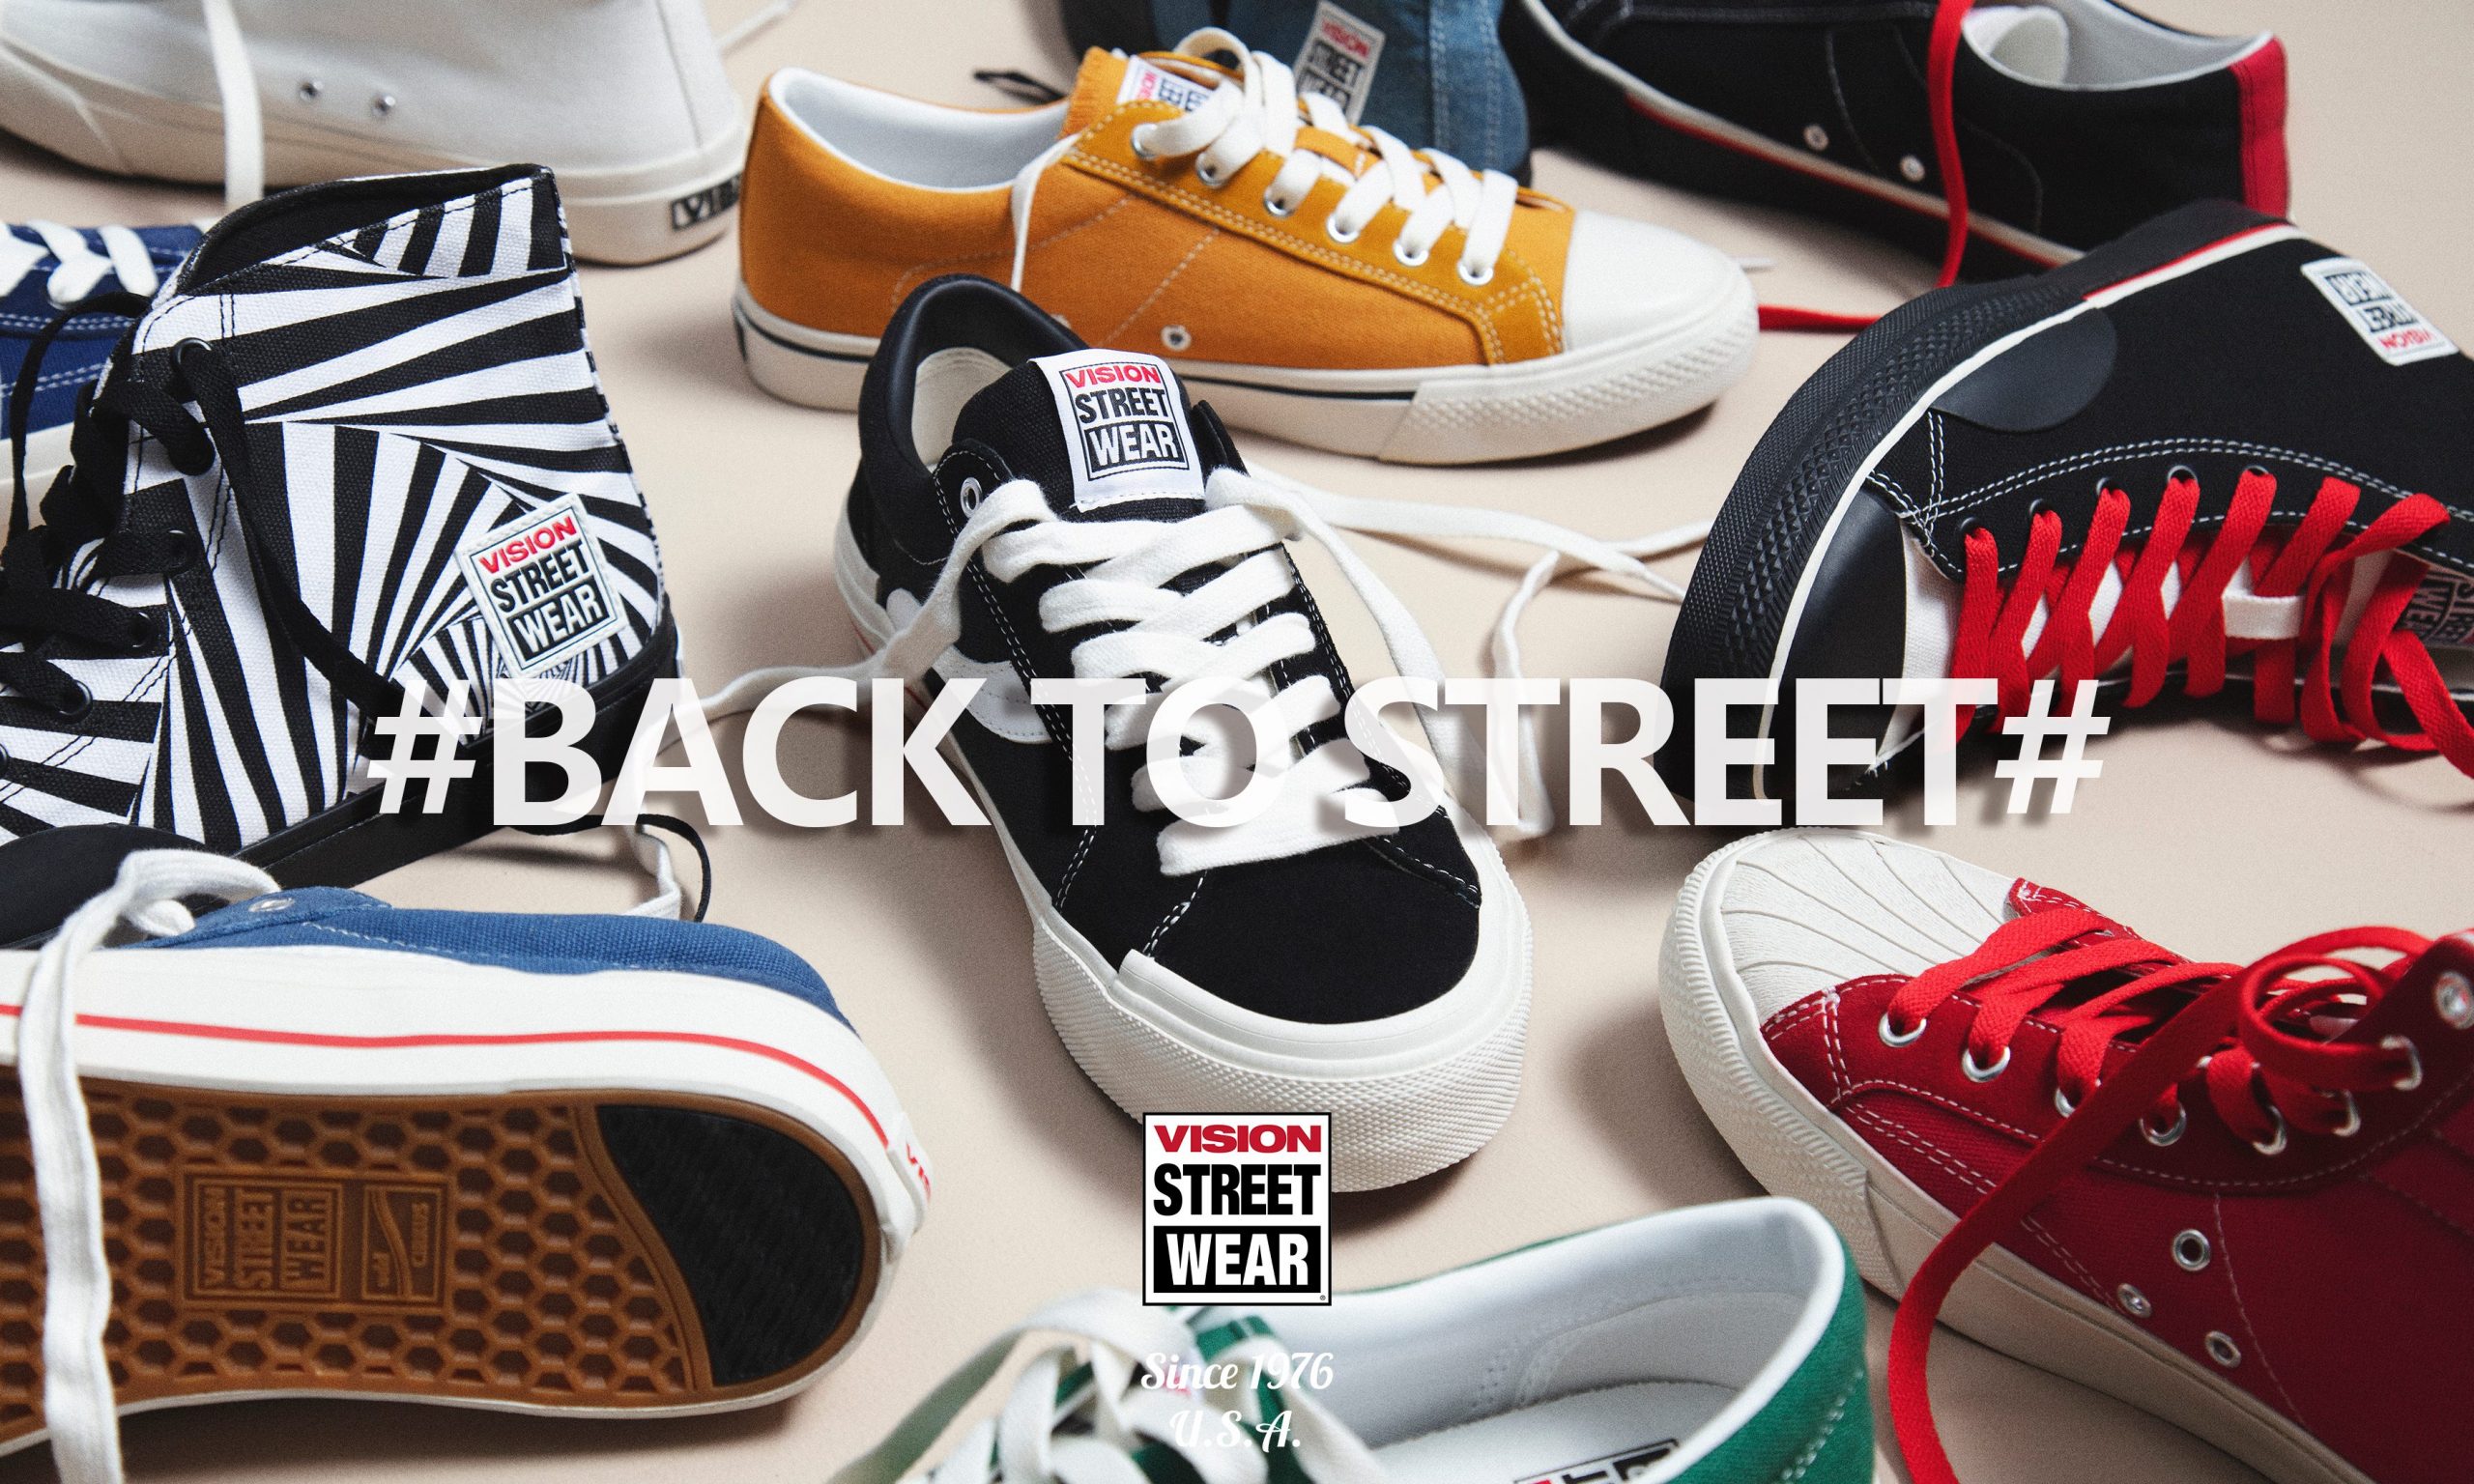 Vision Street Wear 即将推出经典复刻系列鞋款